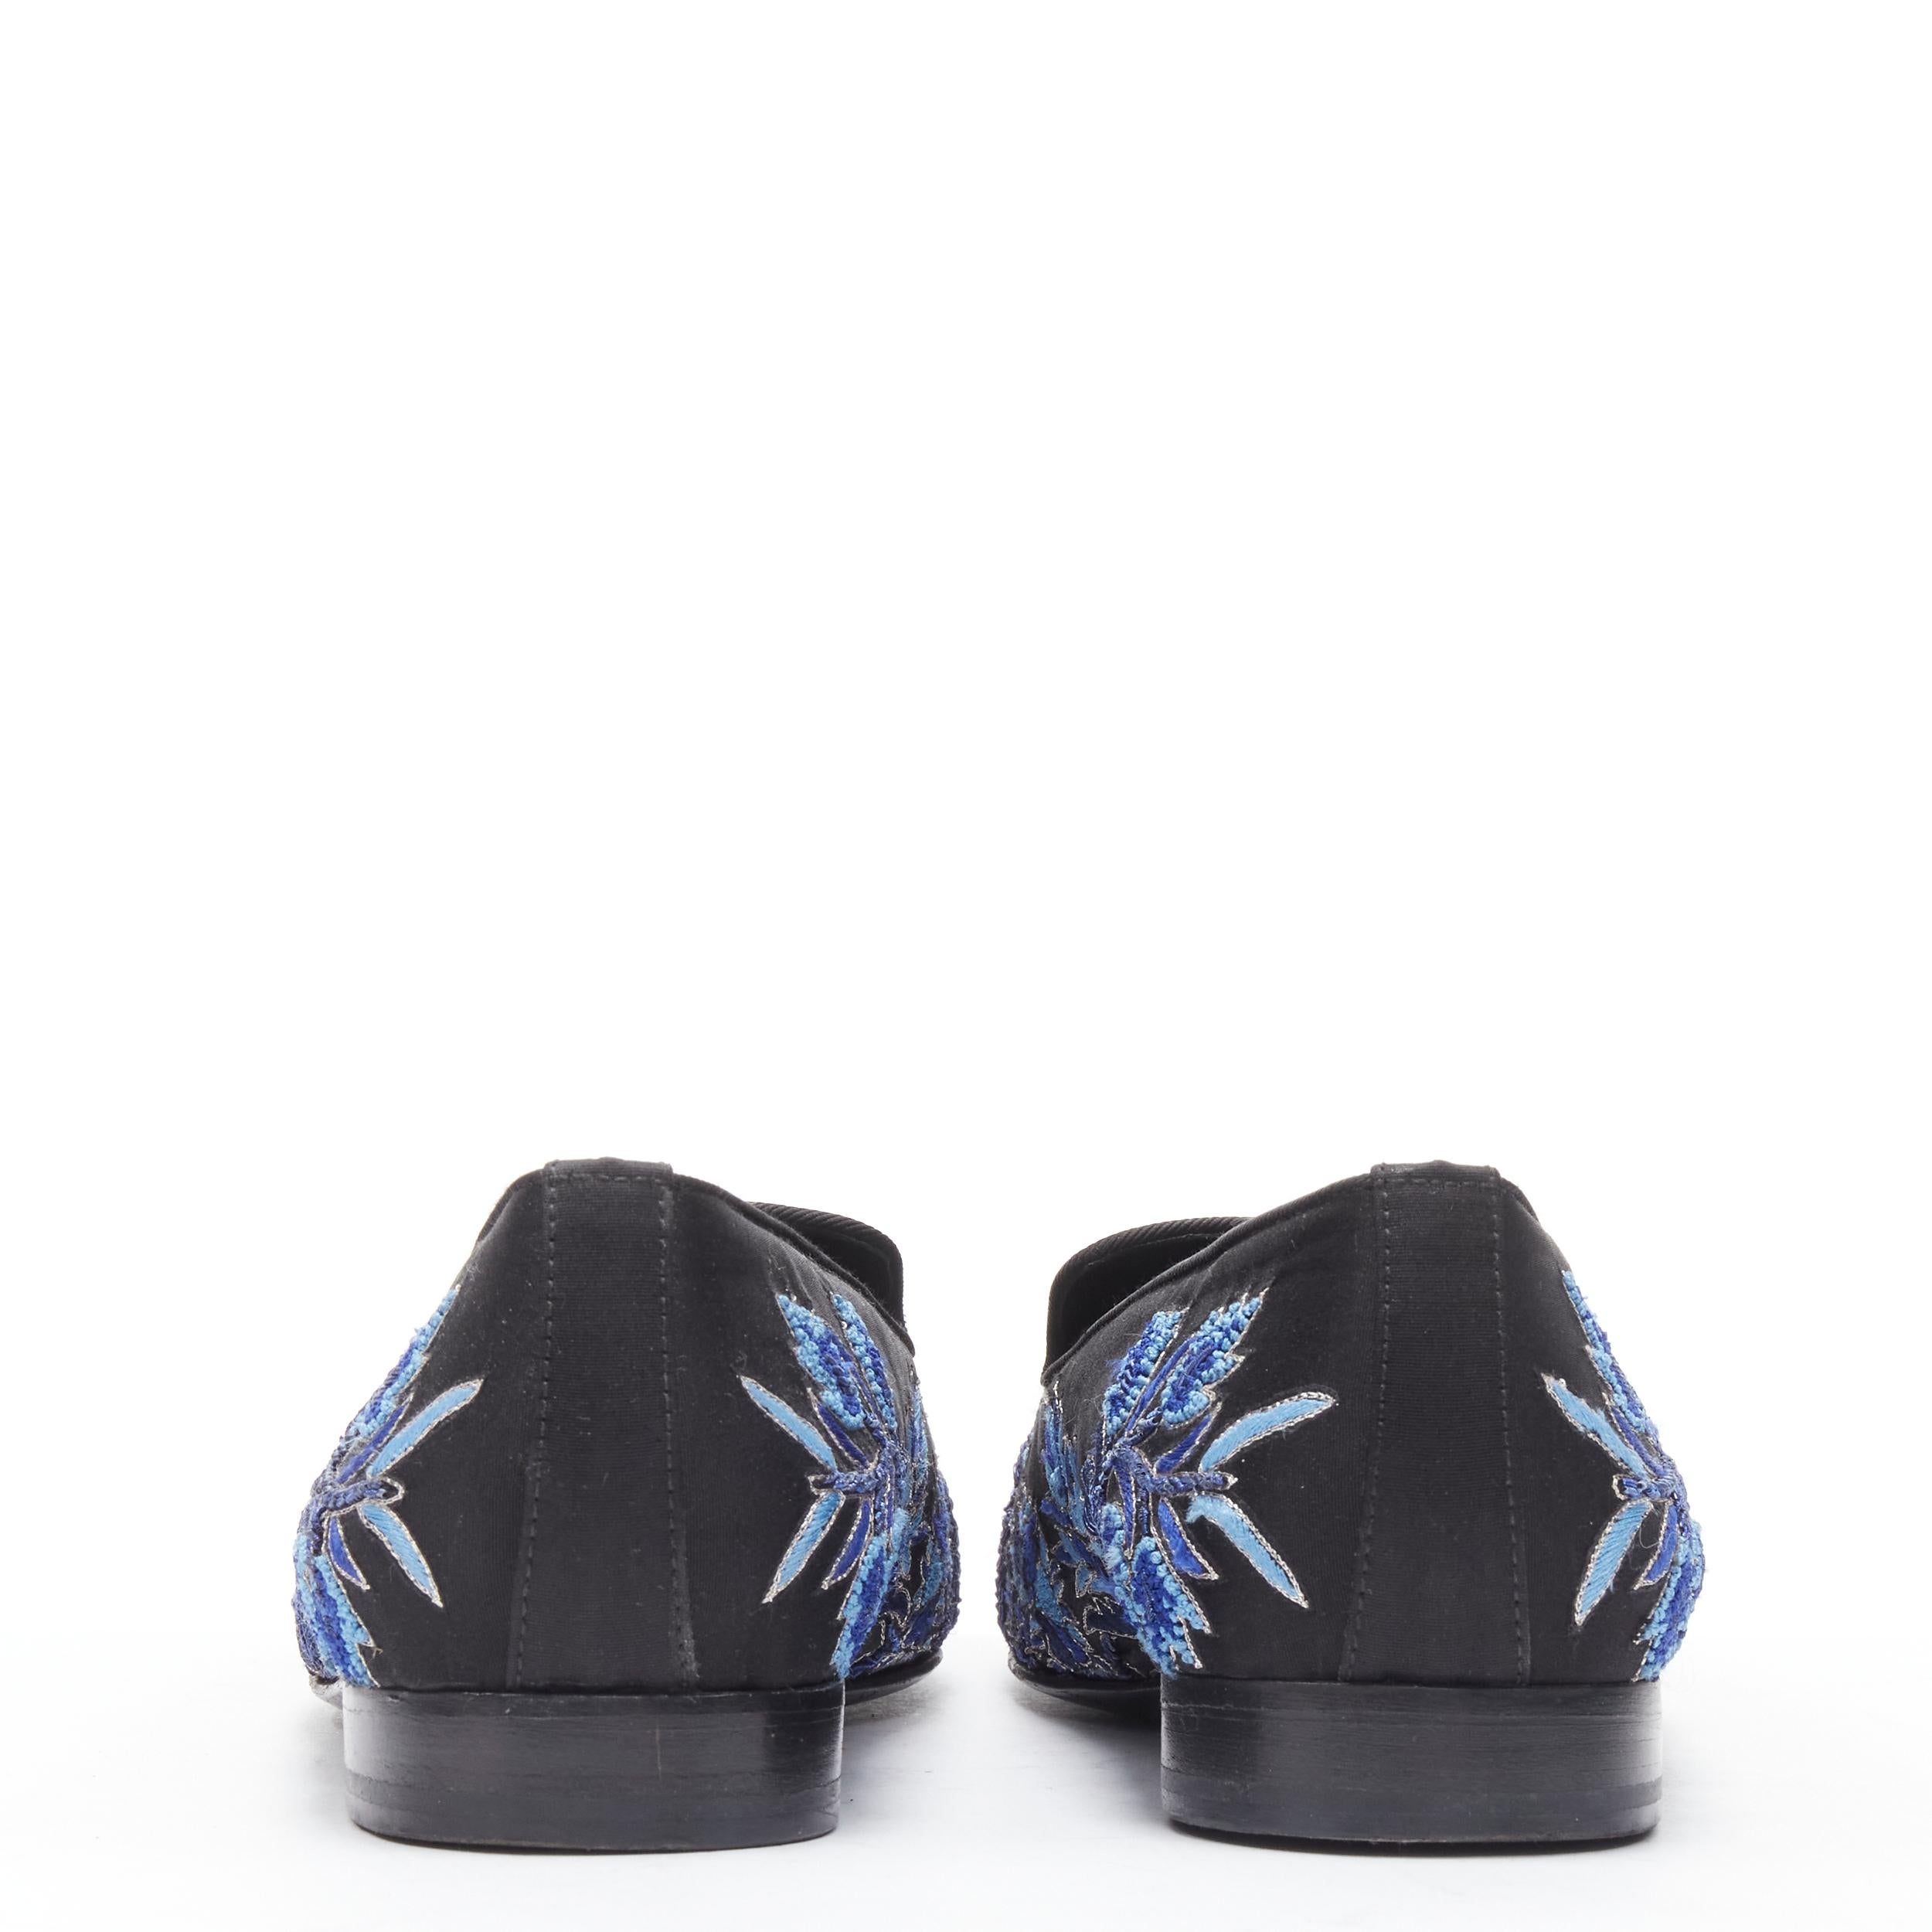 Men's LOUIS LEEMAN black satin blue floral embroidery evening loafer EU42 US9 For Sale